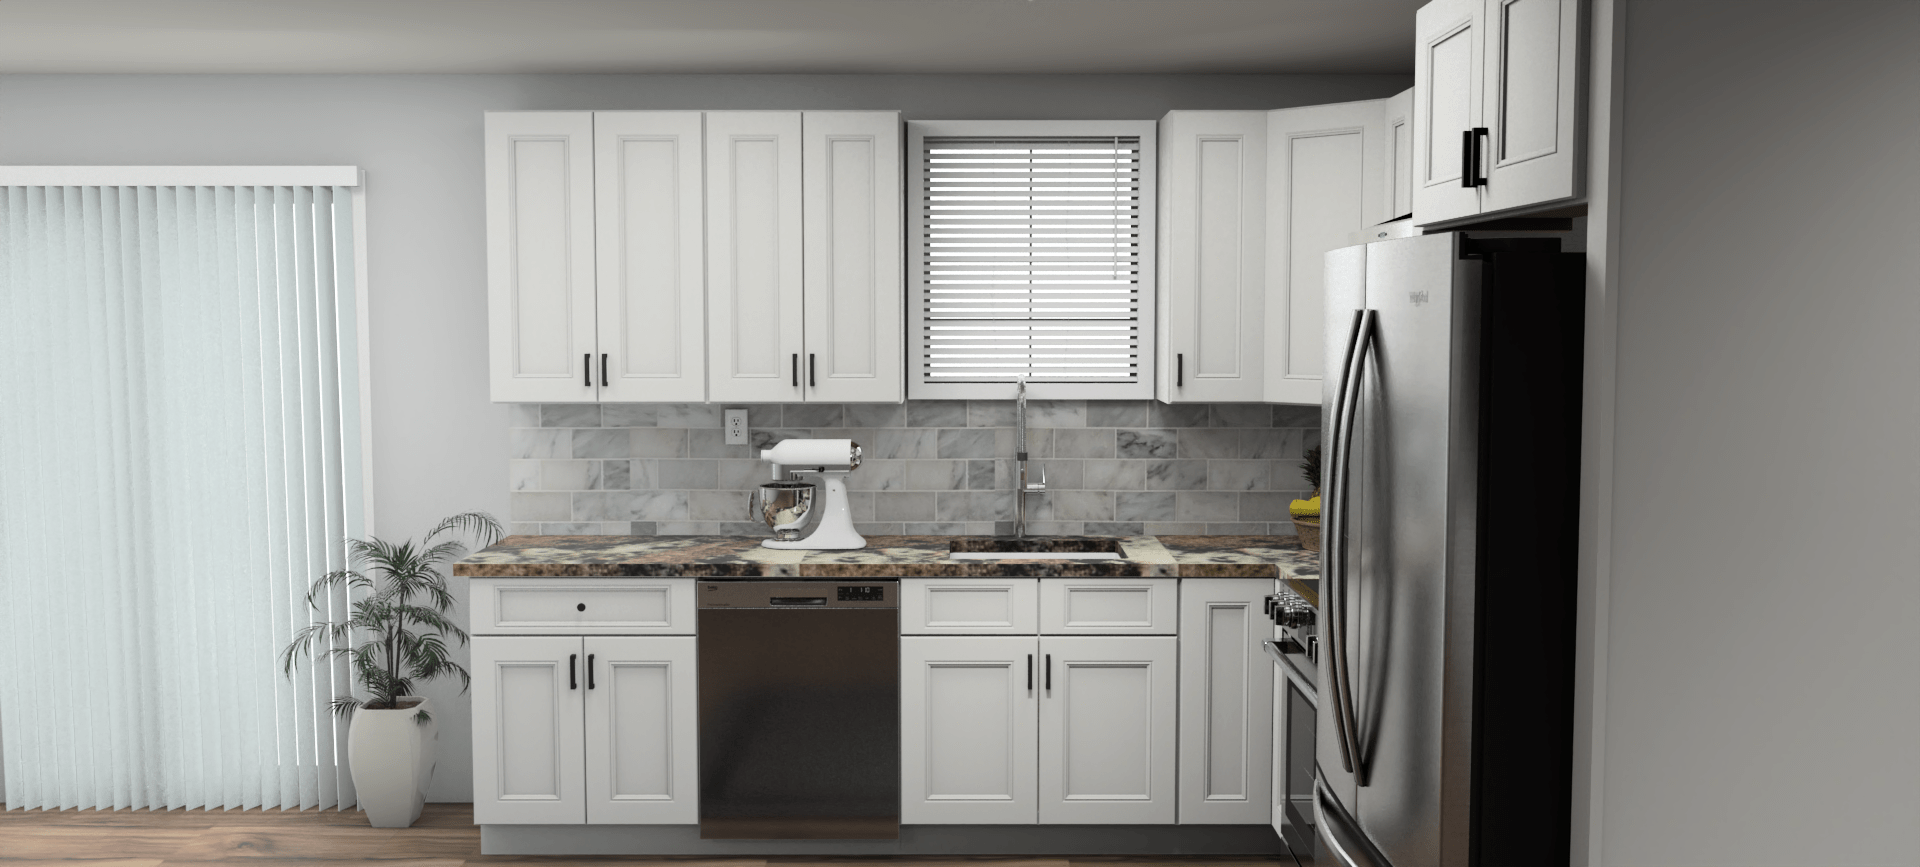 Fabuwood Allure Nexus Frost 10 x 10 L Shaped Kitchen Side Layout Photo